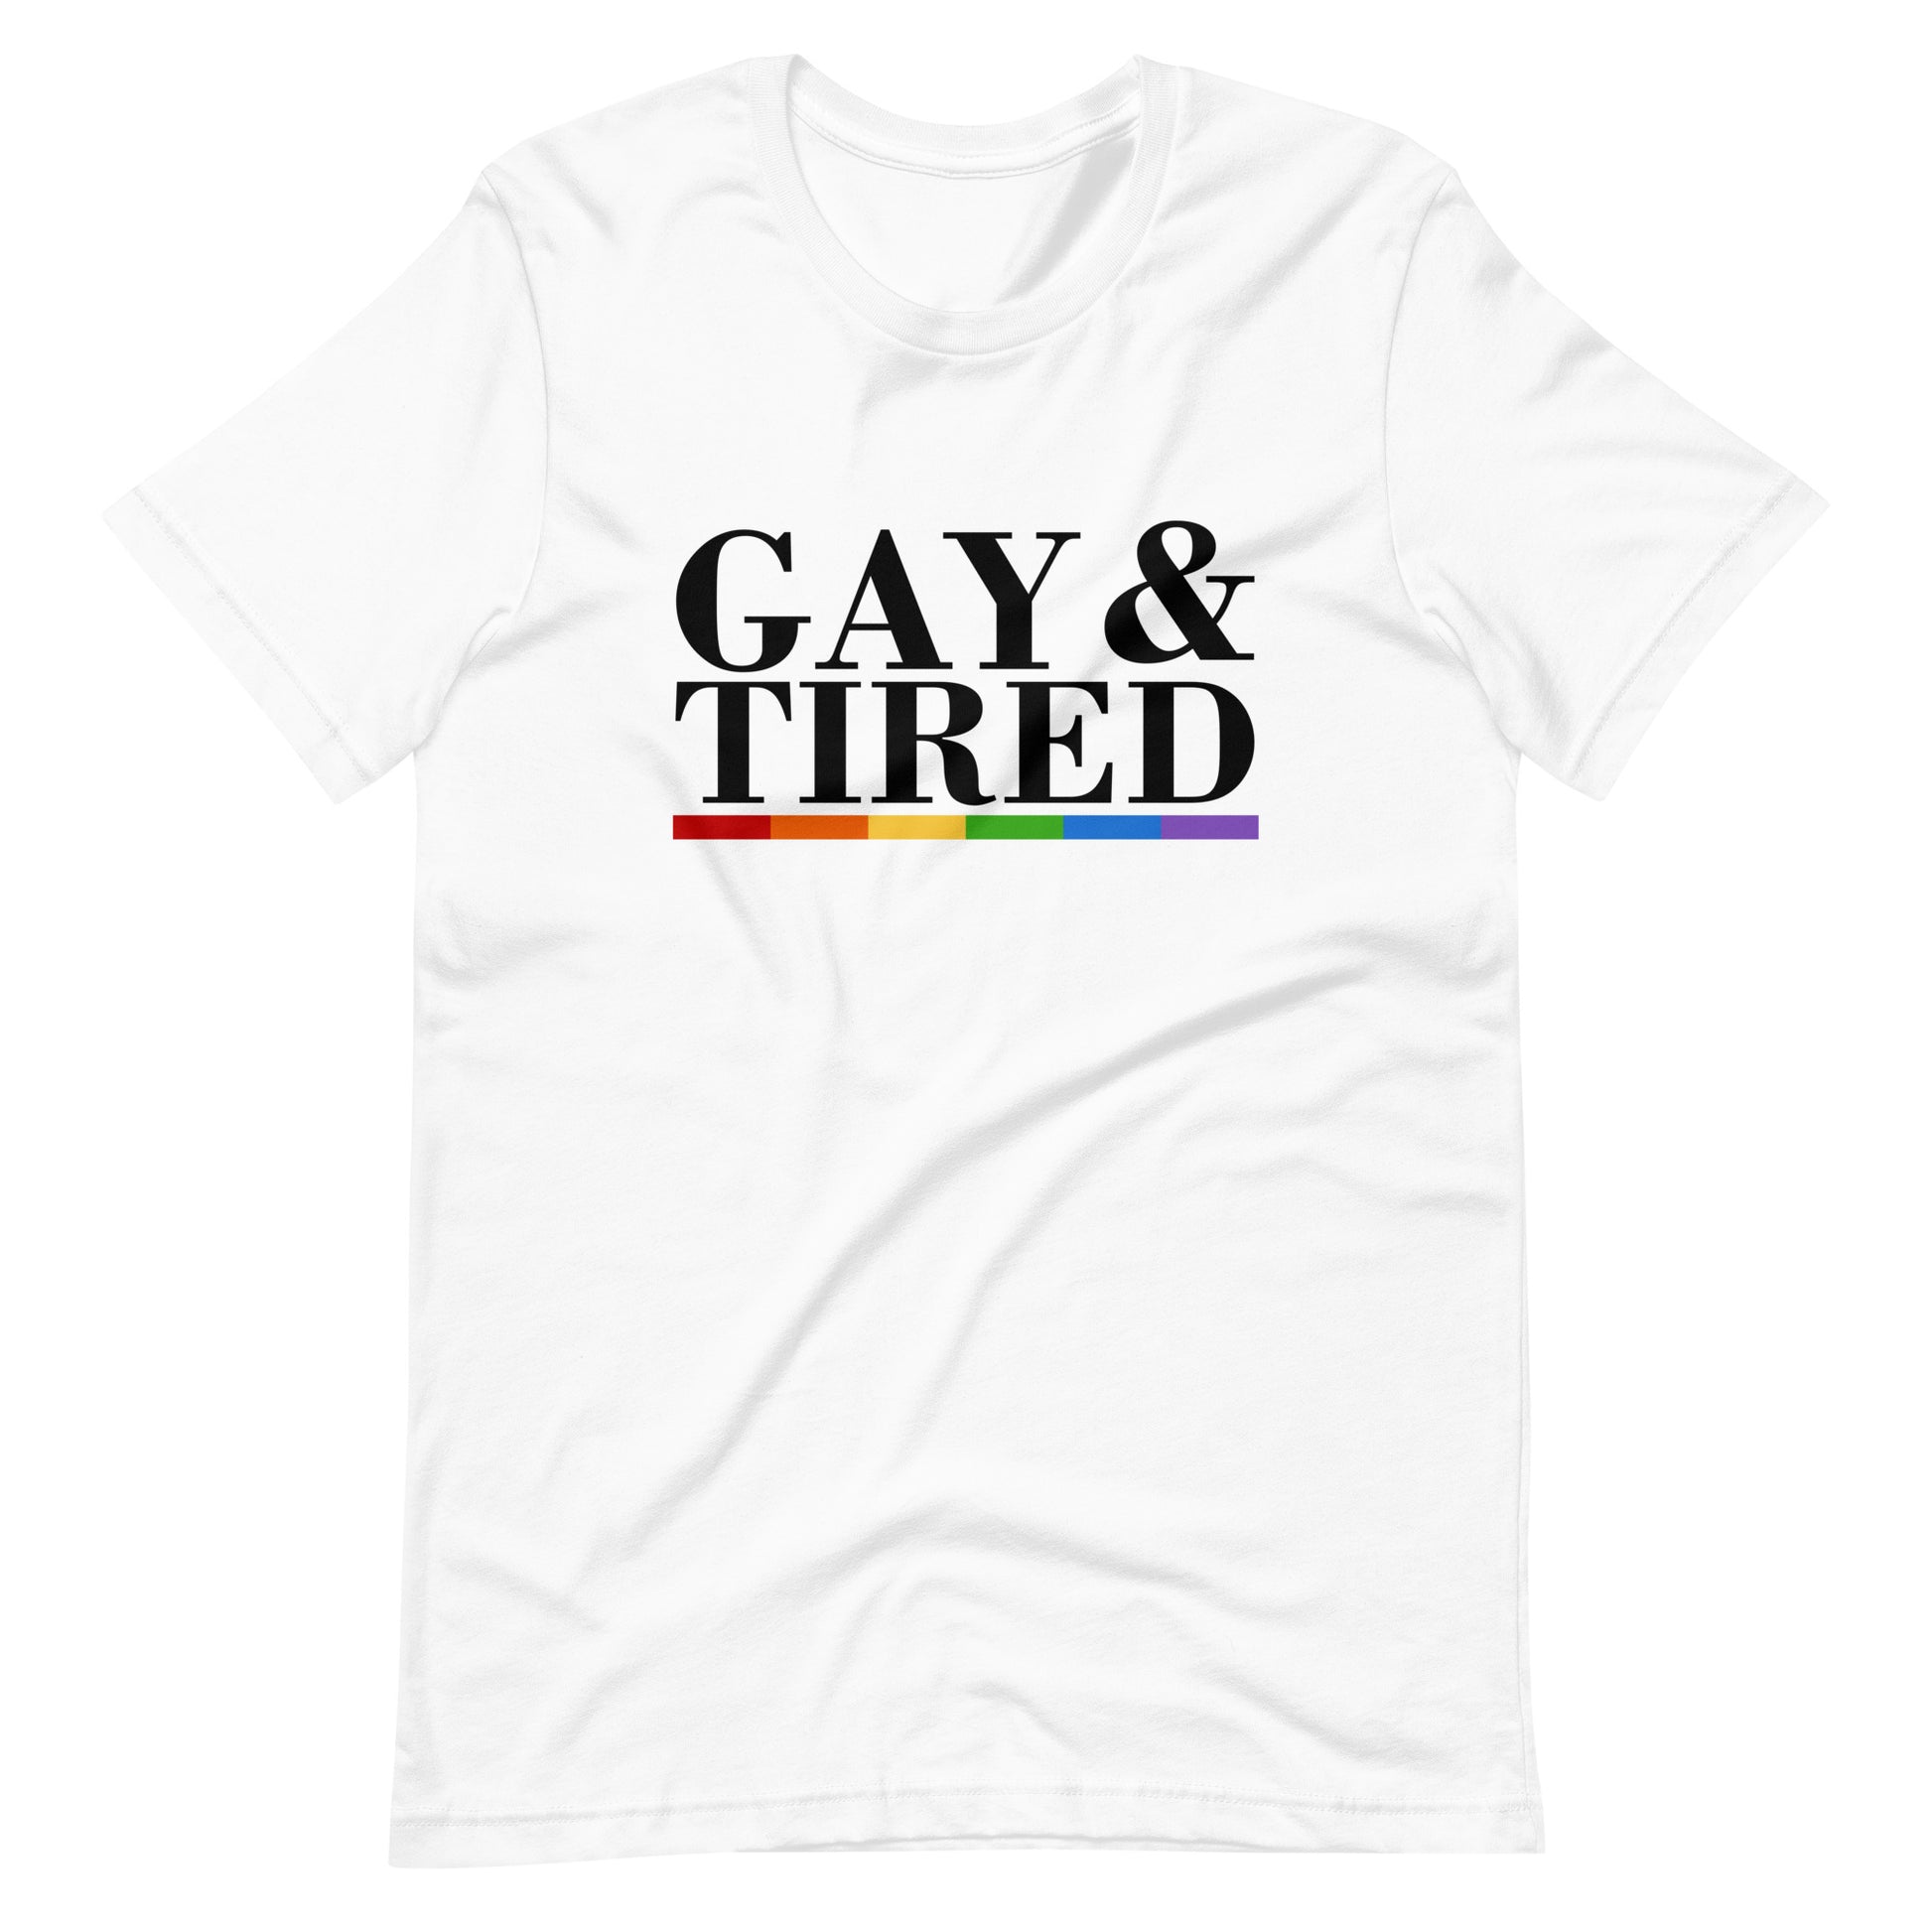 Gay & Tired Premium T-Shirt - gay pride apparel